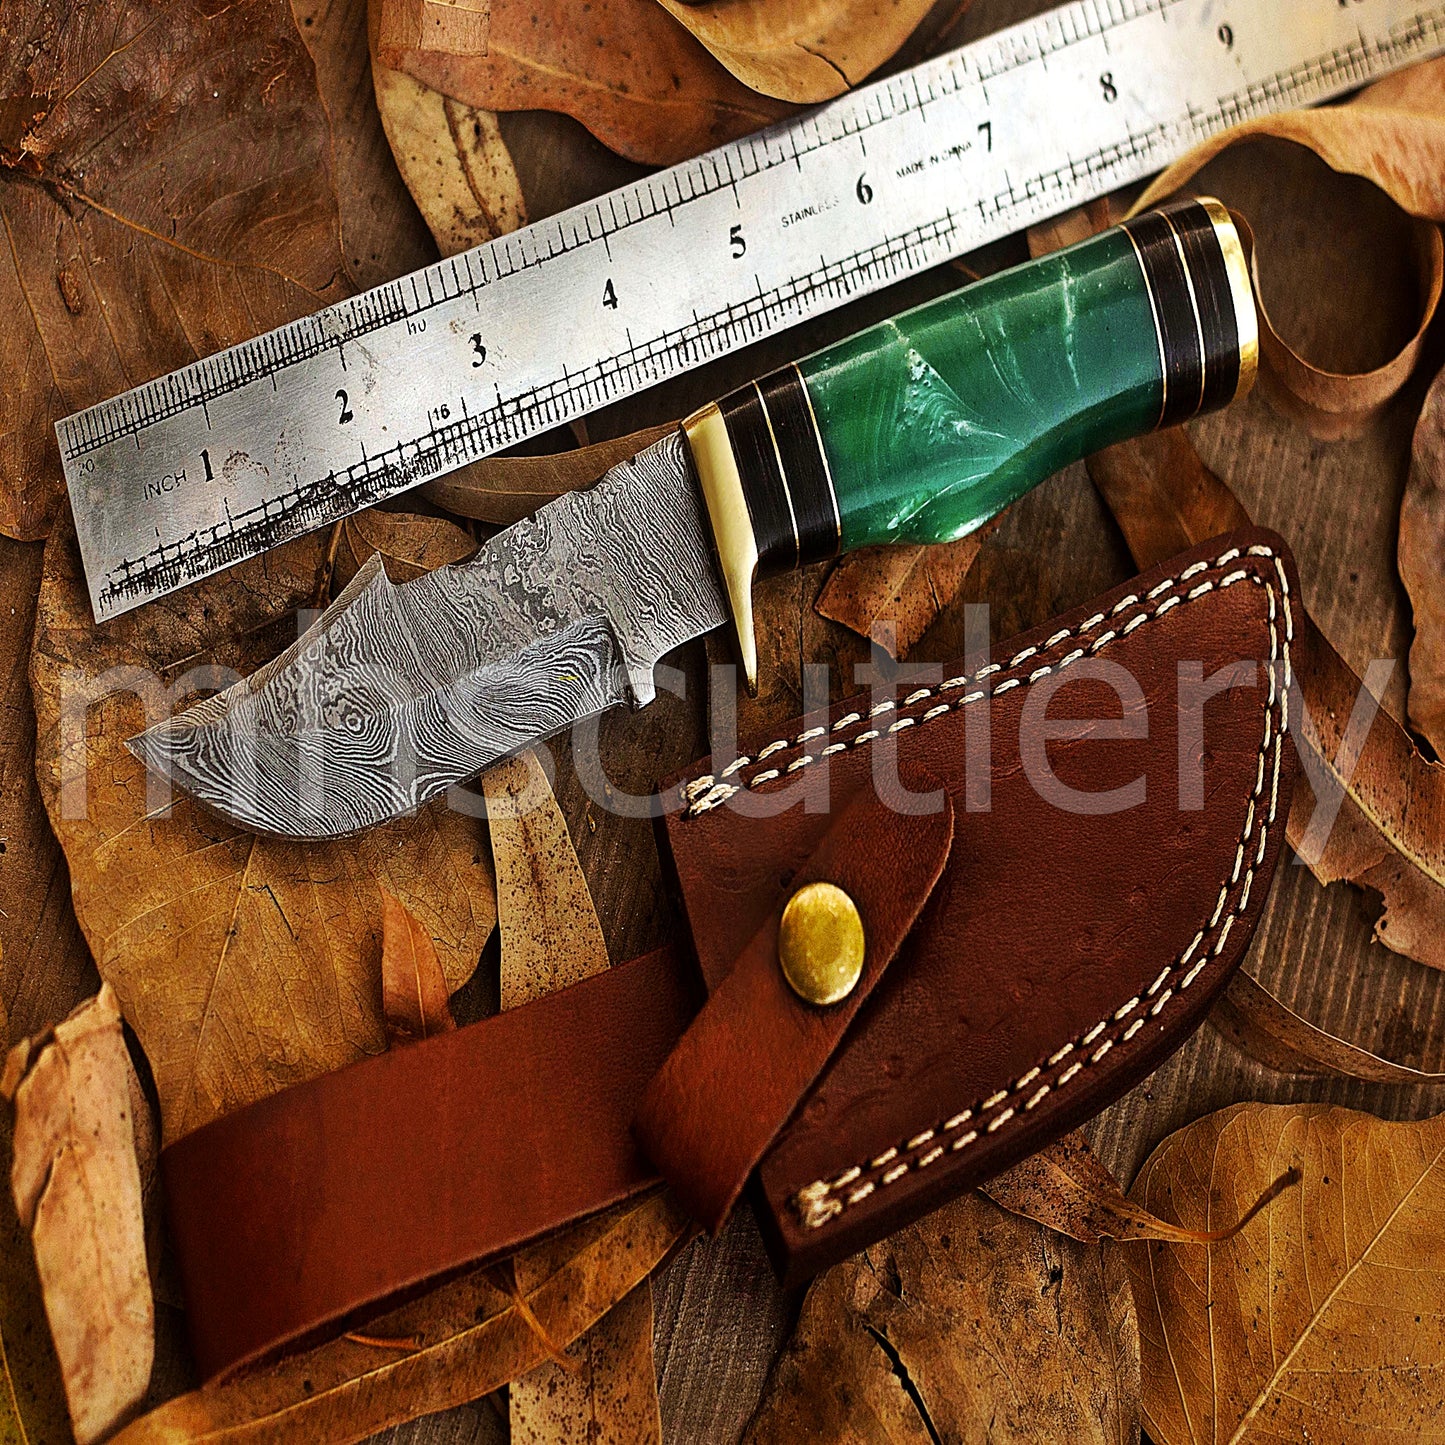 Custom Made Damascus Steel Hunter Skinning Knife With Green Resin Handle | mhscutlery